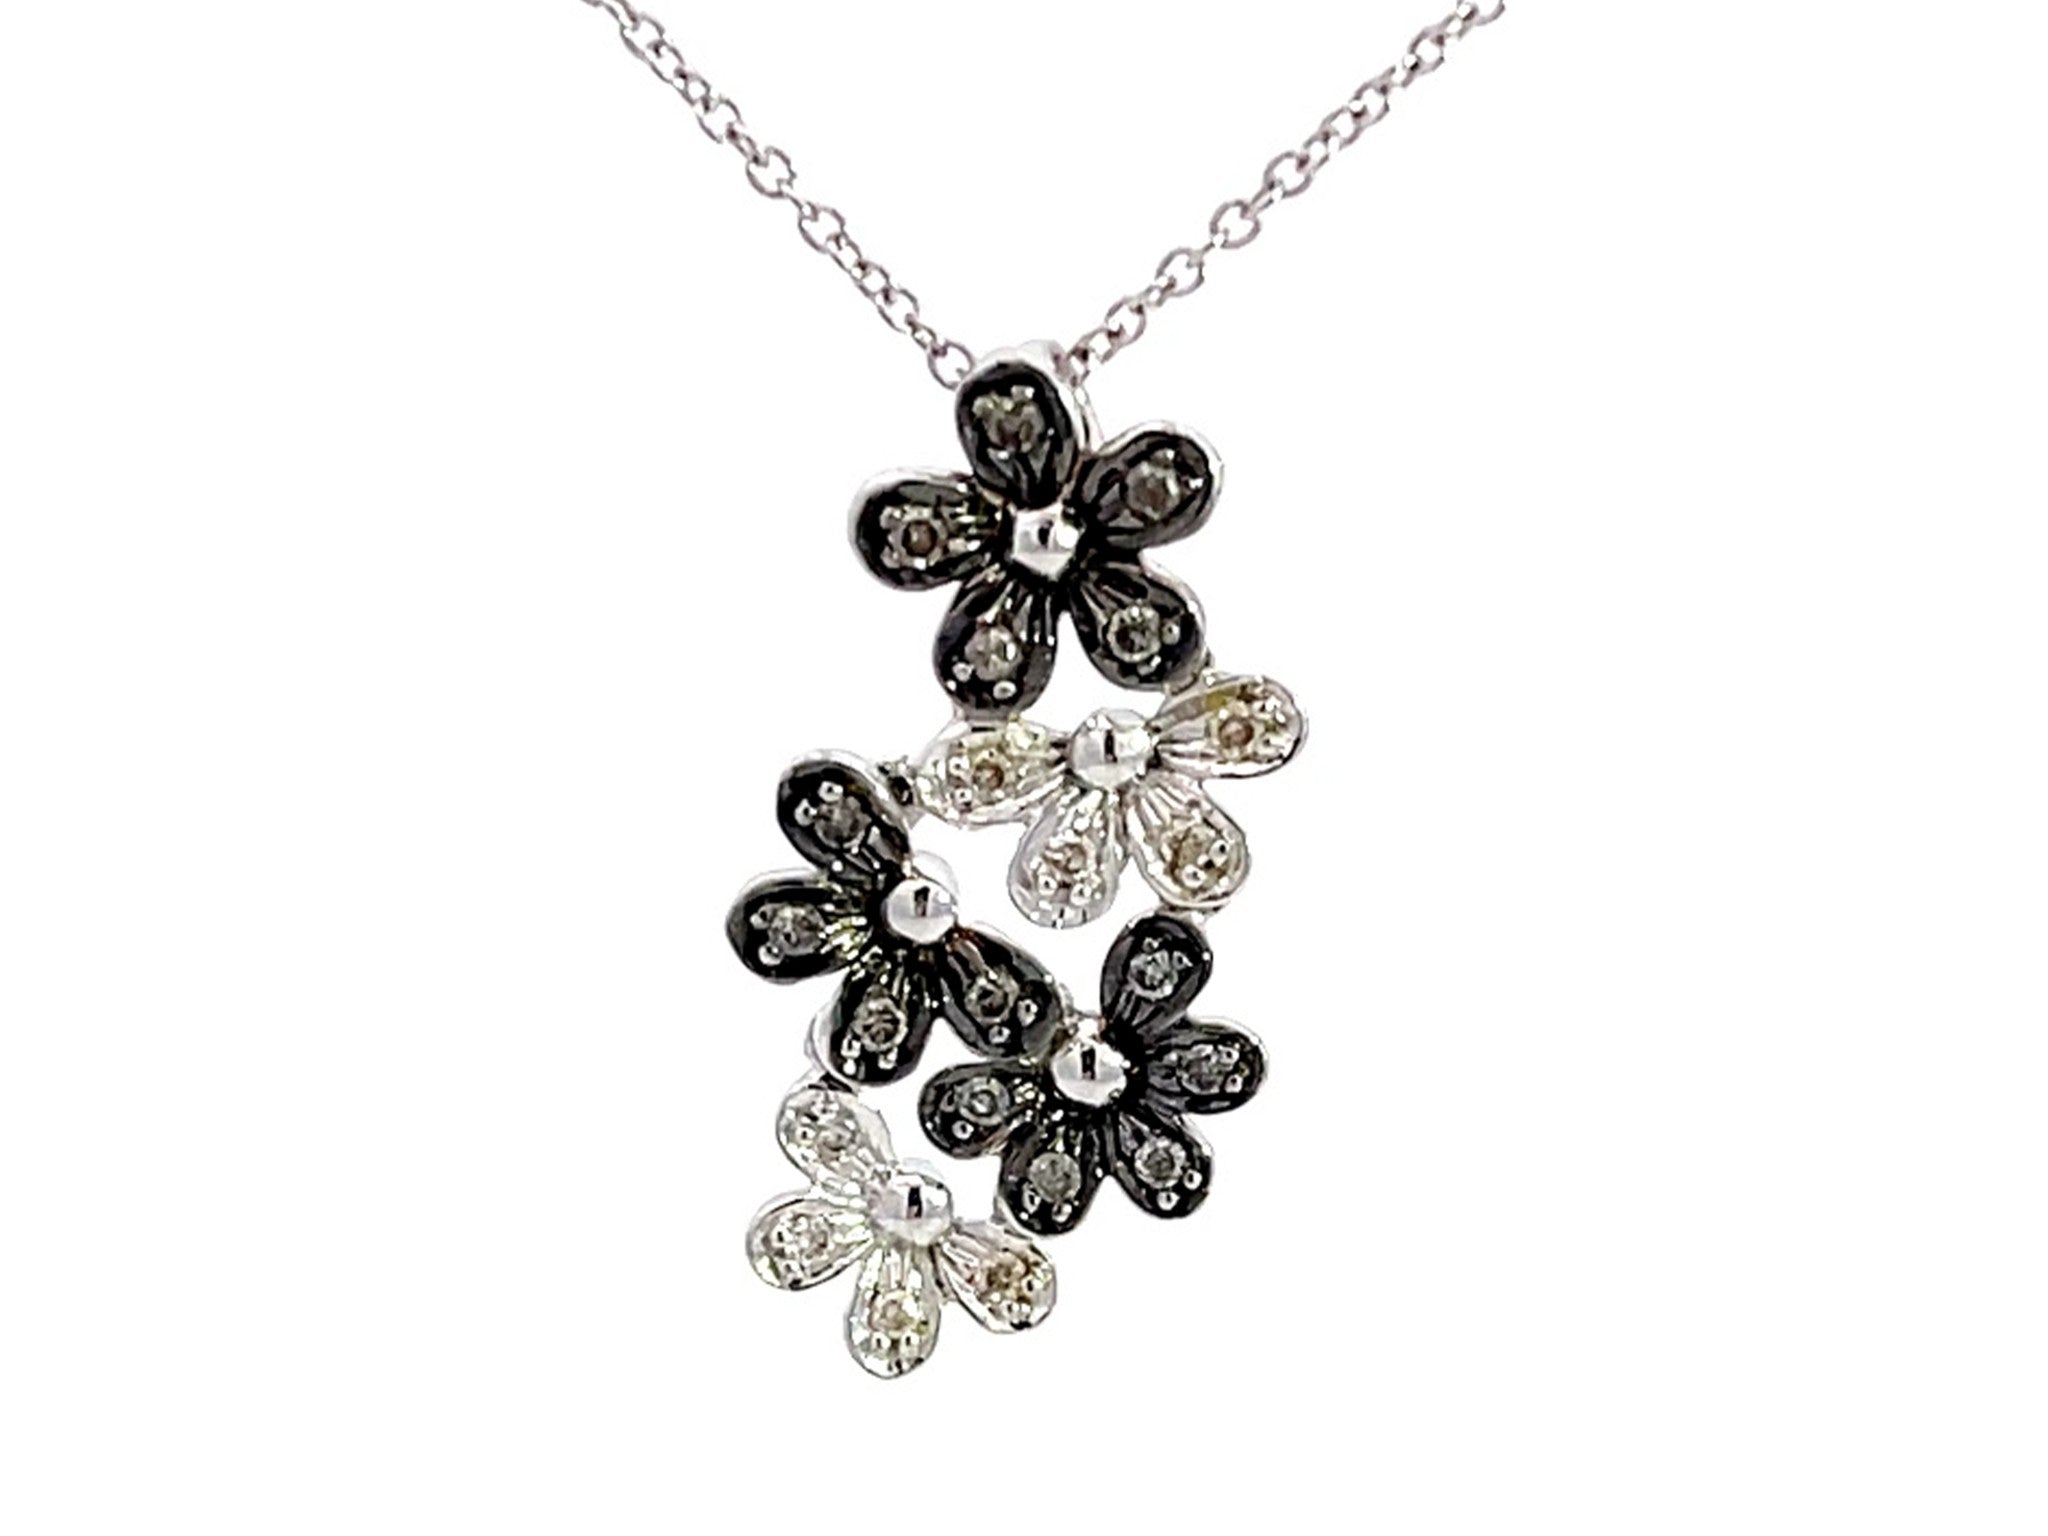 5 Diamond Flower Pendant Necklace in 14k White Gold